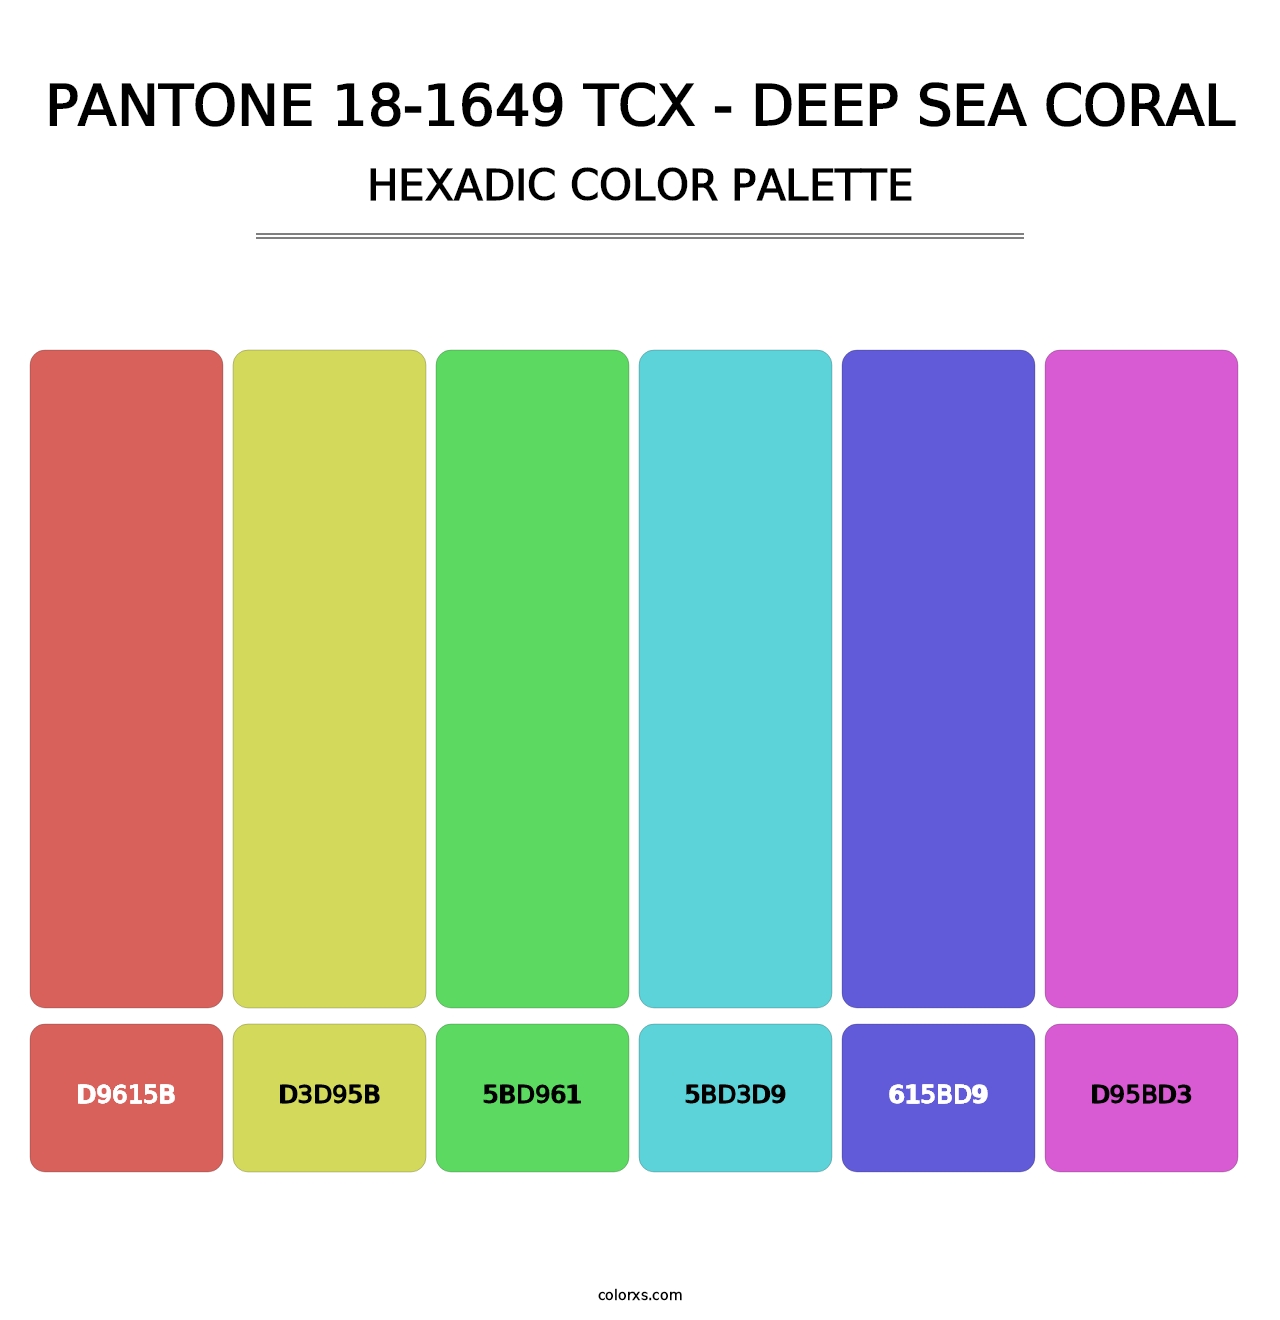 PANTONE 18-1649 TCX - Deep Sea Coral - Hexadic Color Palette